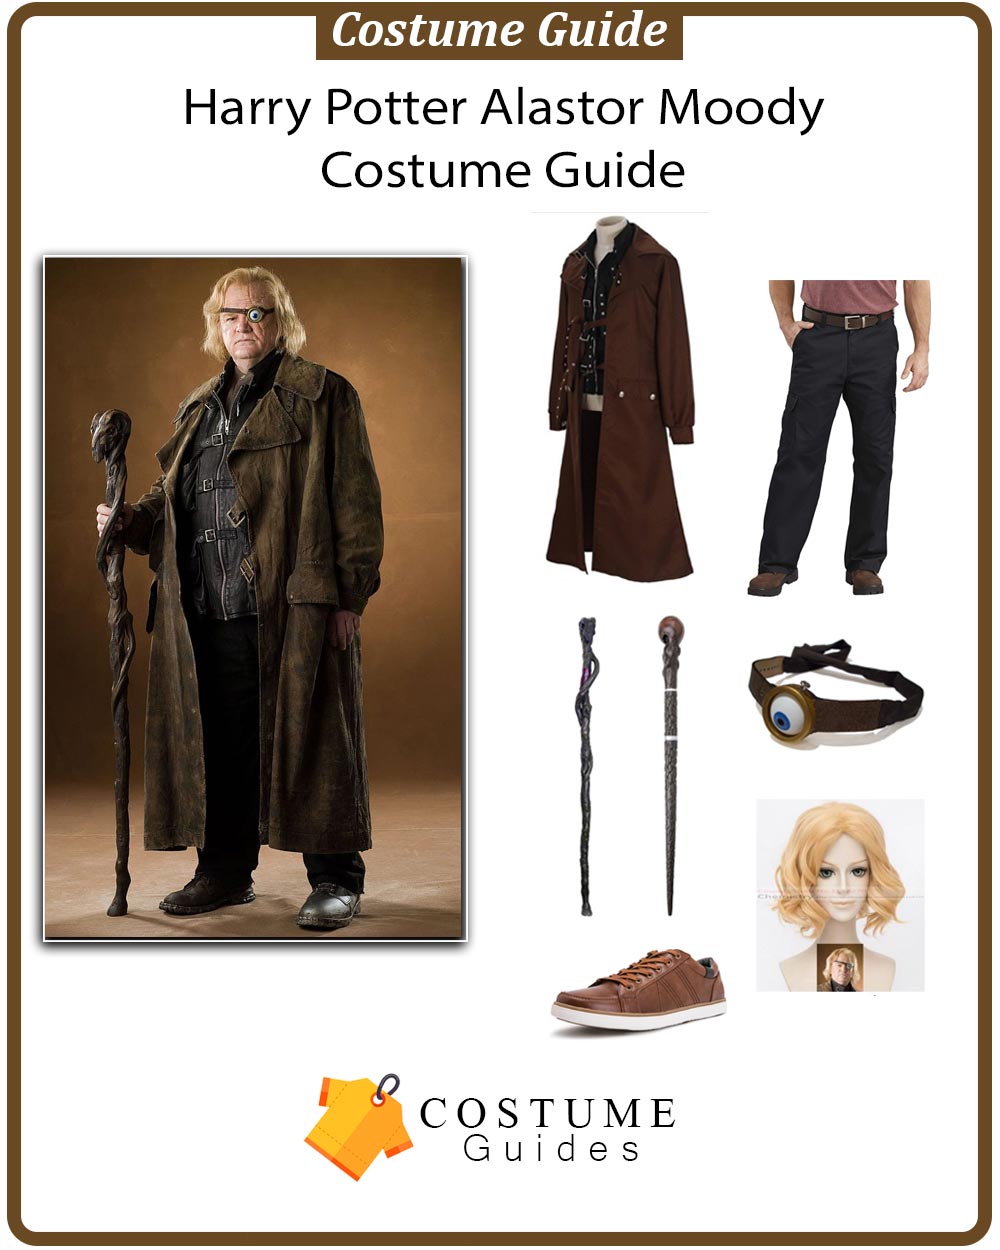 Harry-Potter-Alastor-Costume-Guide